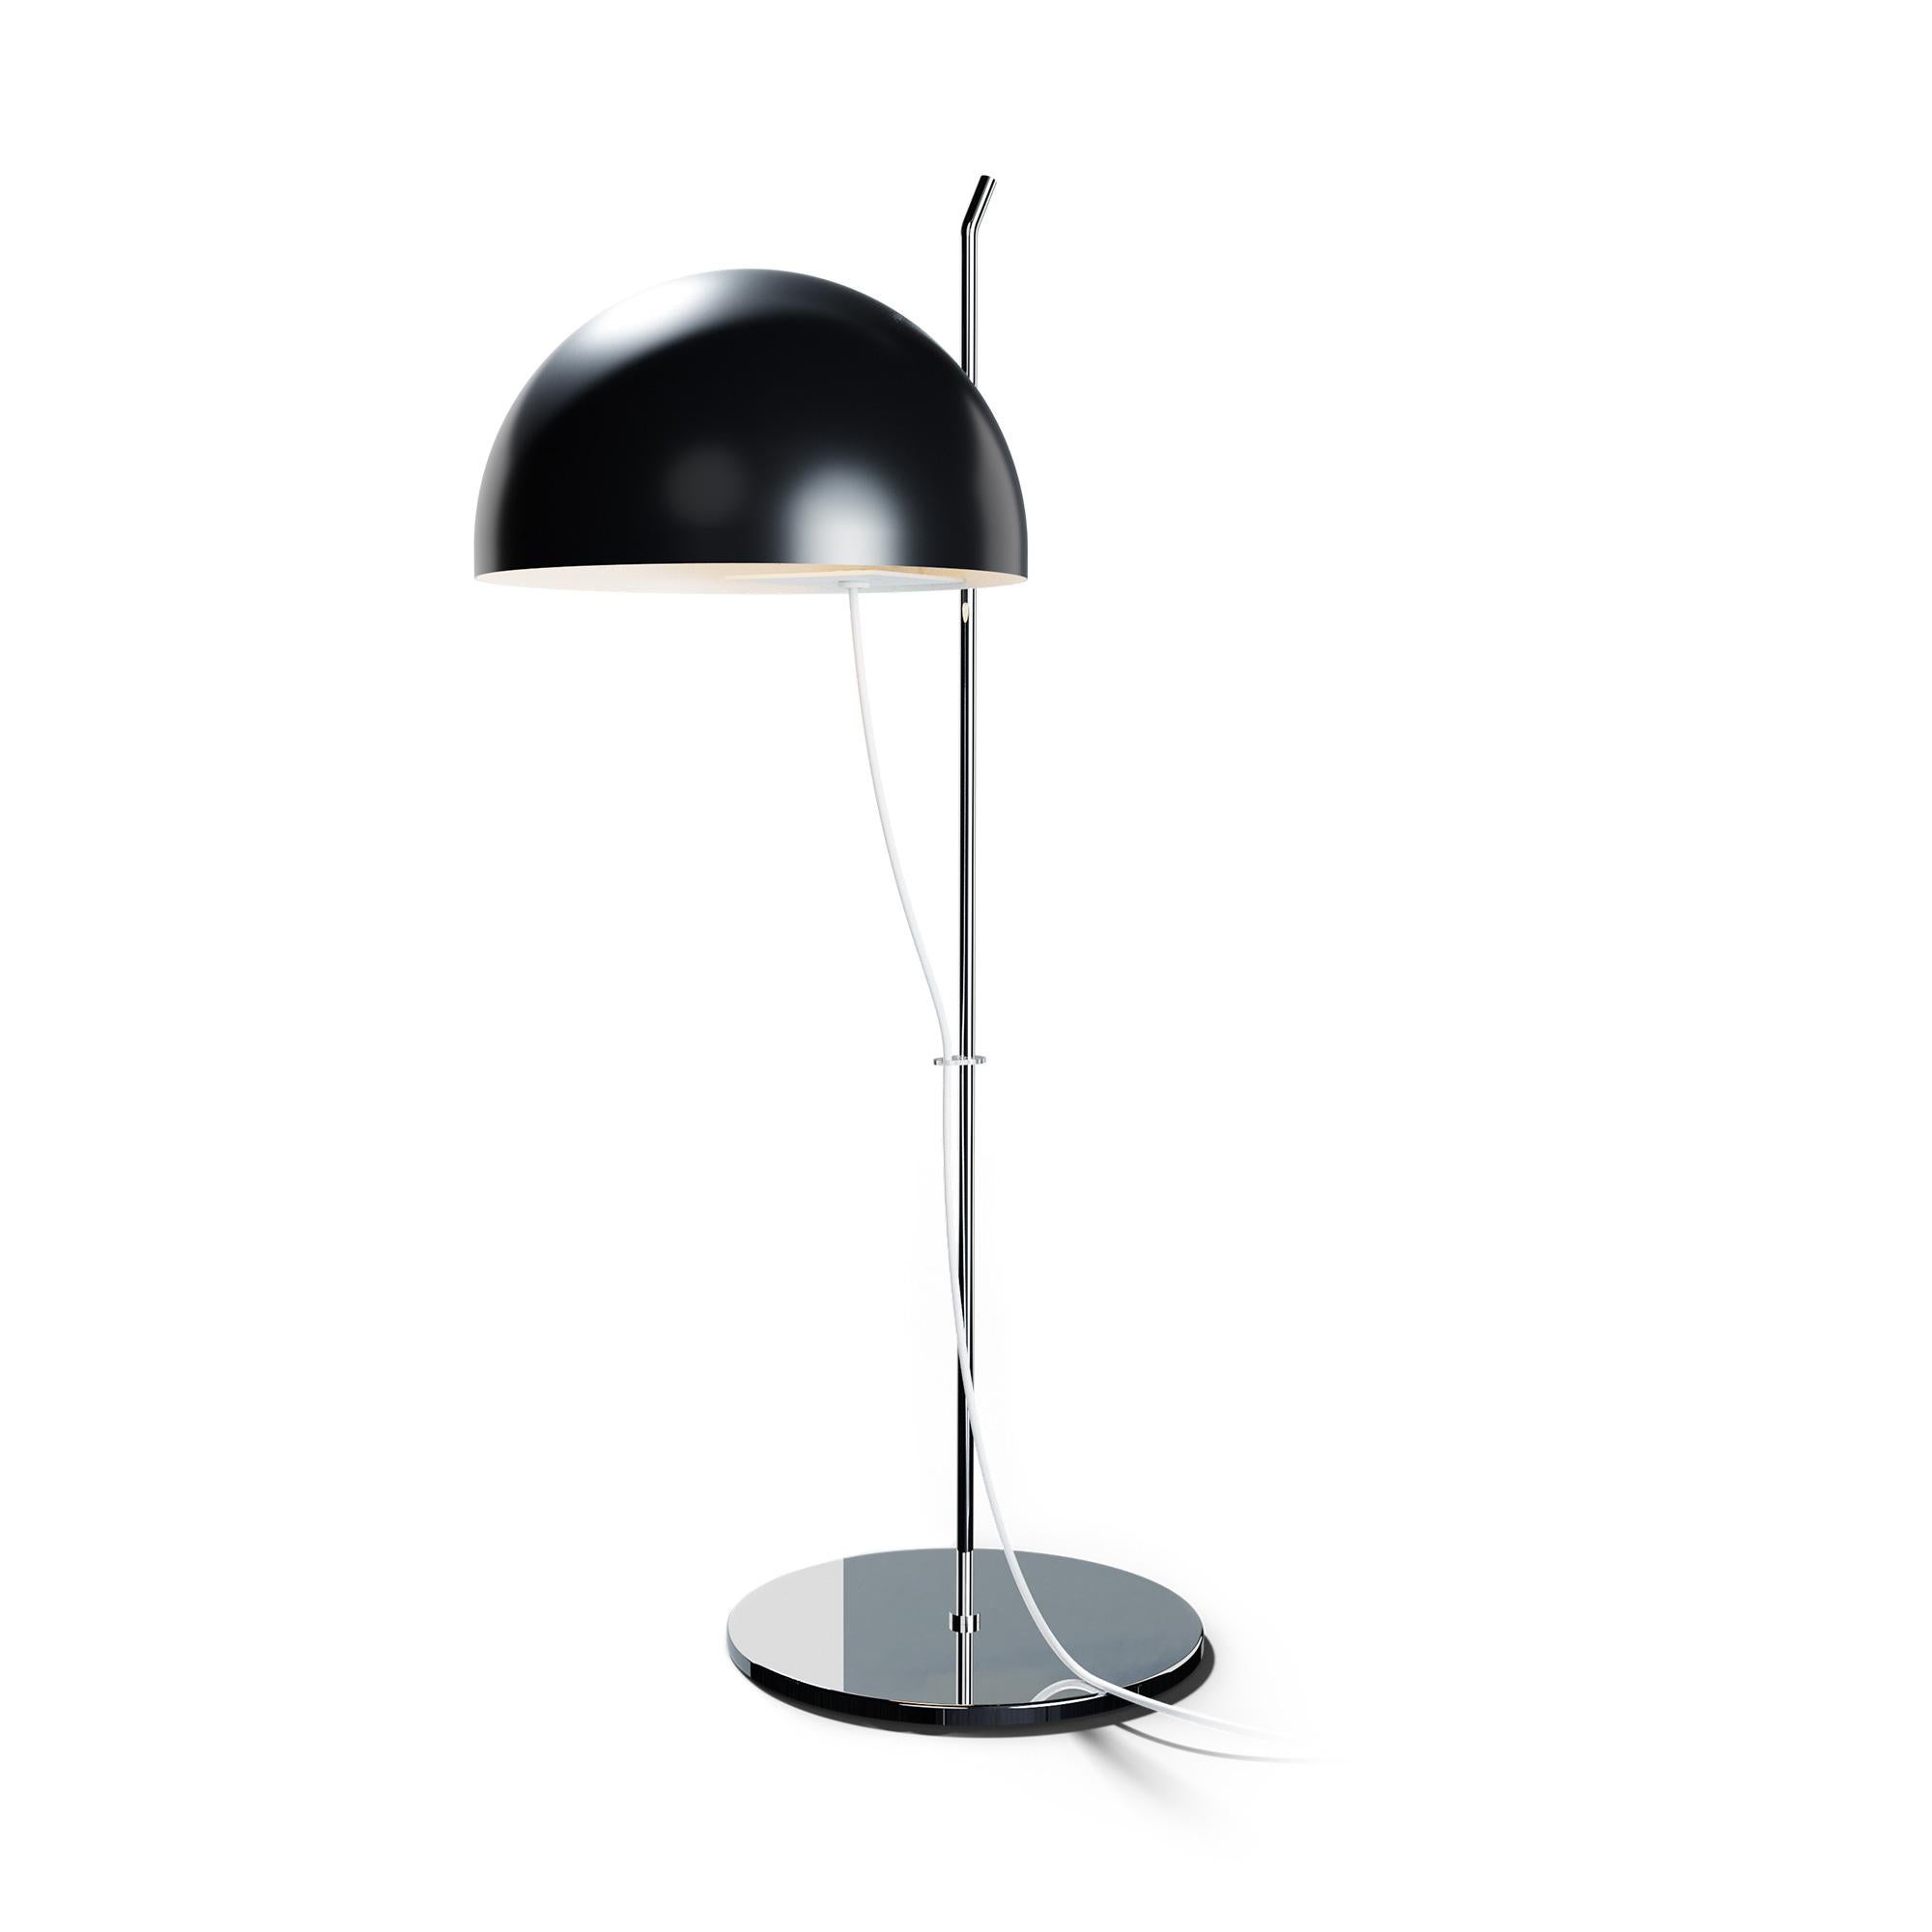 Lacquered Alain Richard 'A21' Desk Lamp in Black for Disderot For Sale